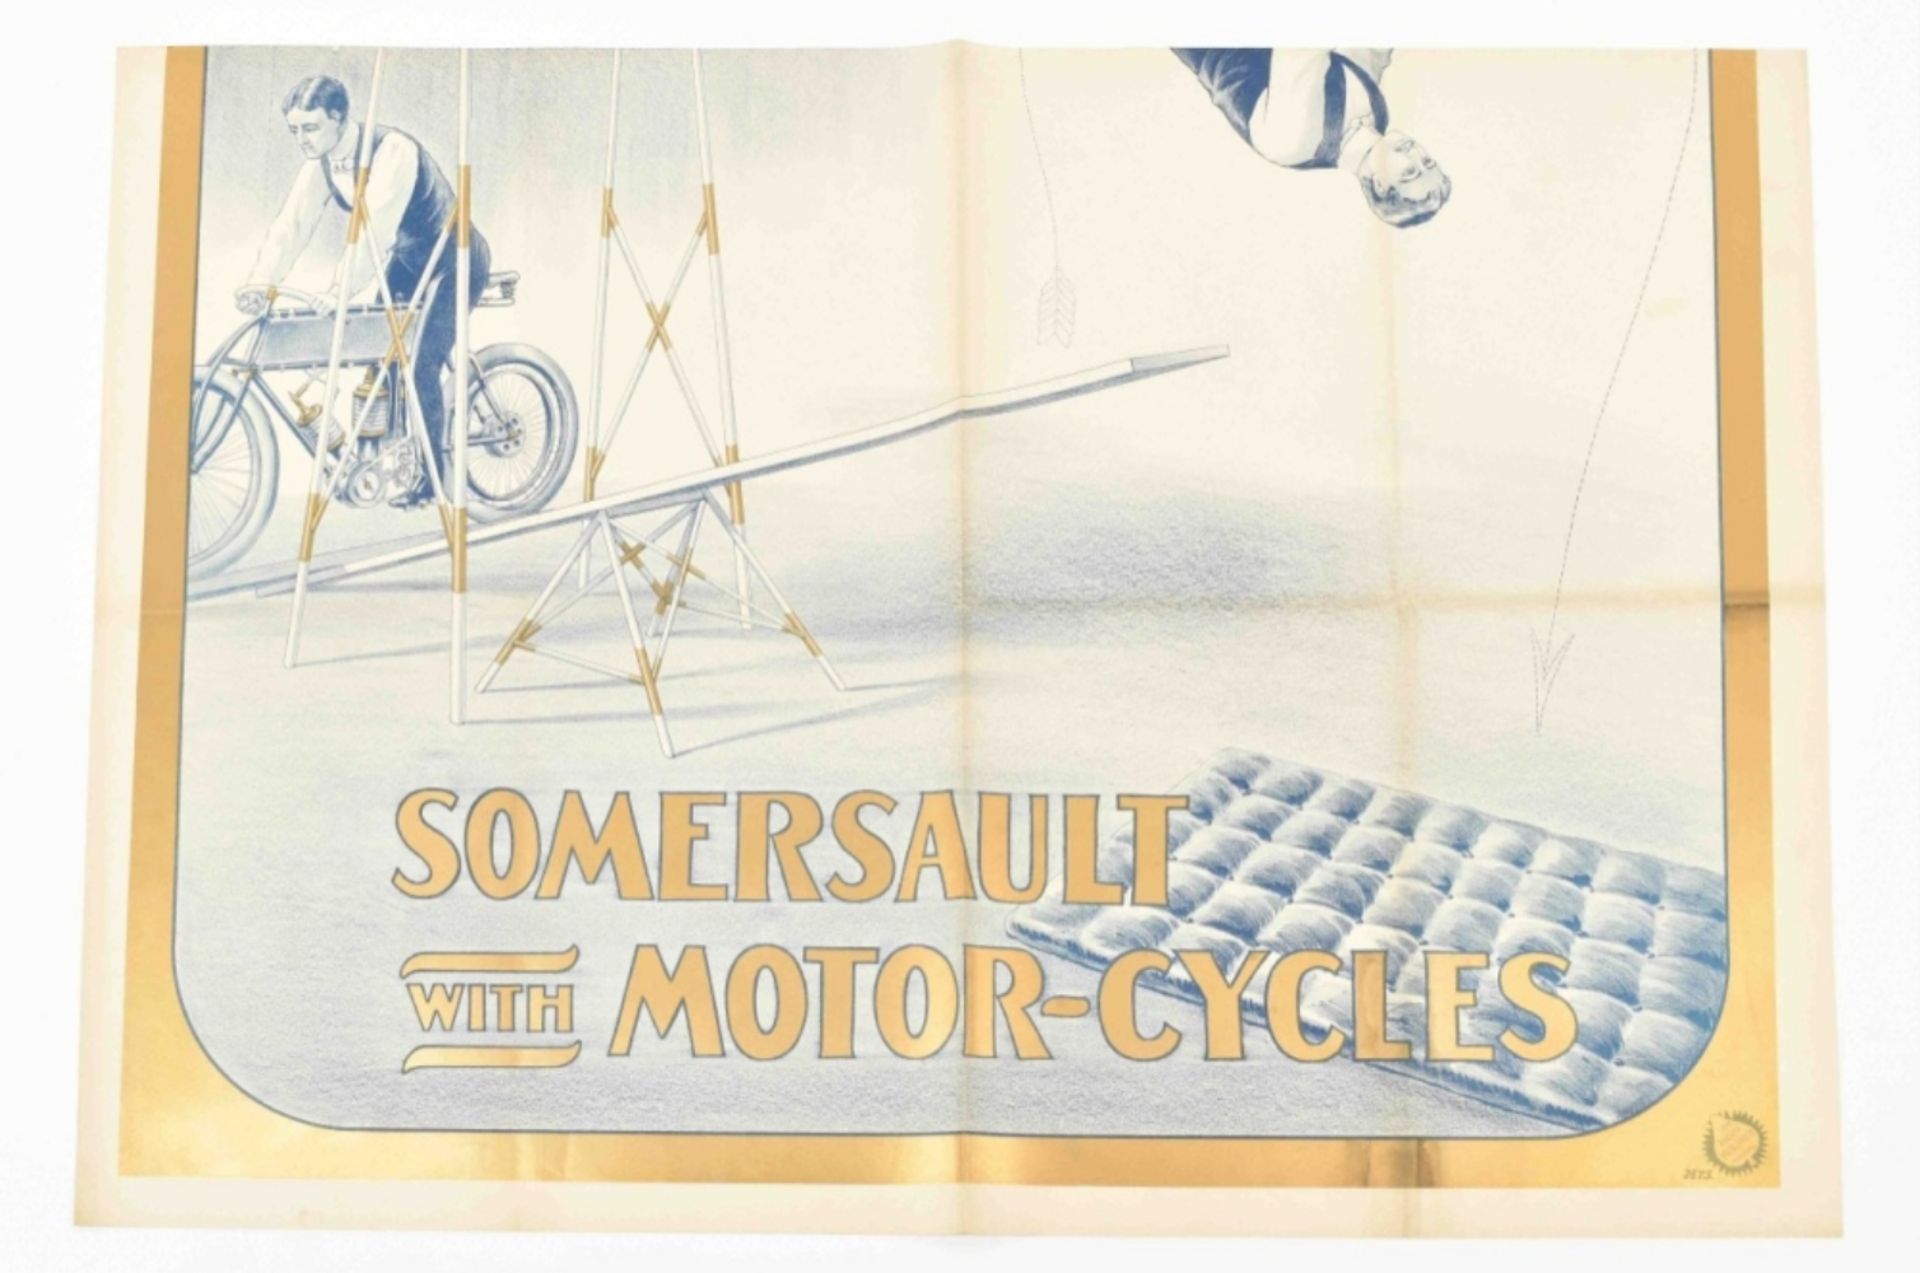 [Acrobatics] [Motorcycle] Sidney brothers. Somersault with motor-cycles Friedländer, Hamburg, 1906 - Bild 3 aus 6